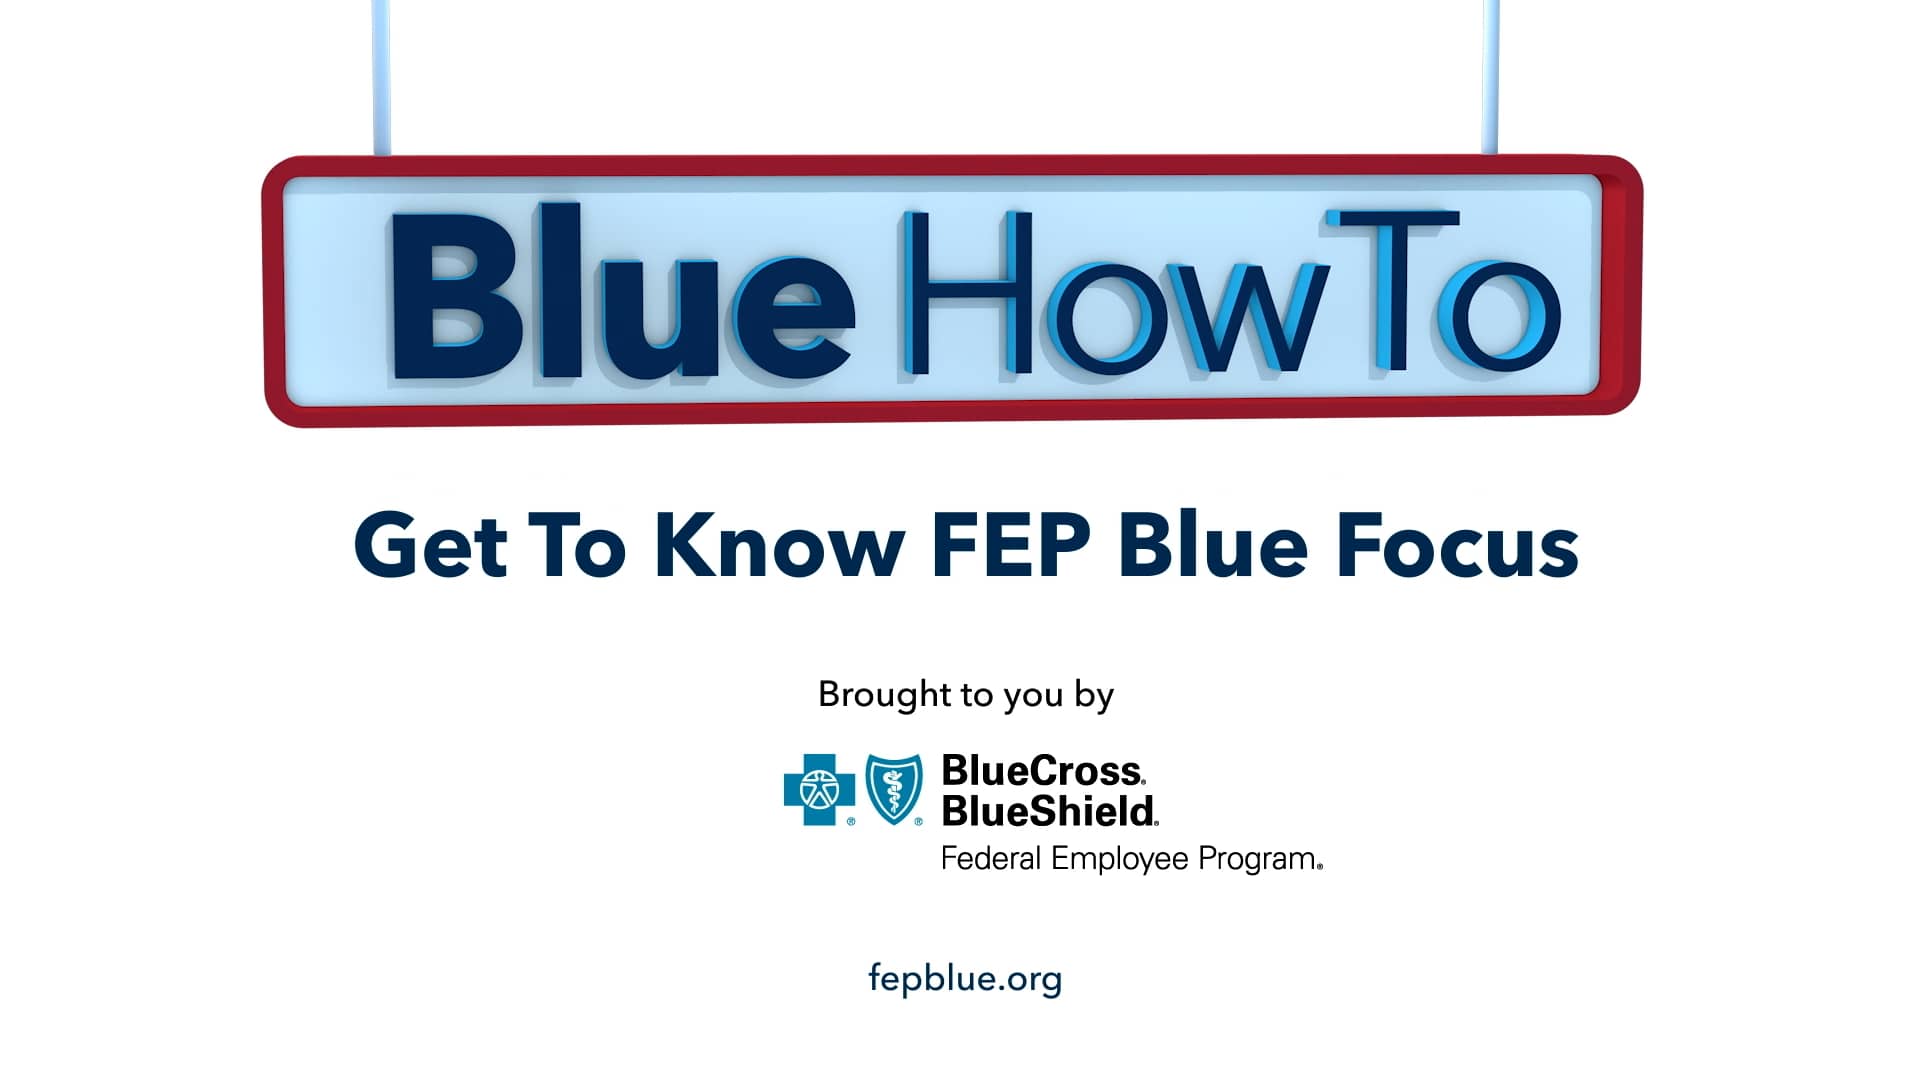 Blue HowTo FEP Blue Focus.mp4 on Vimeo